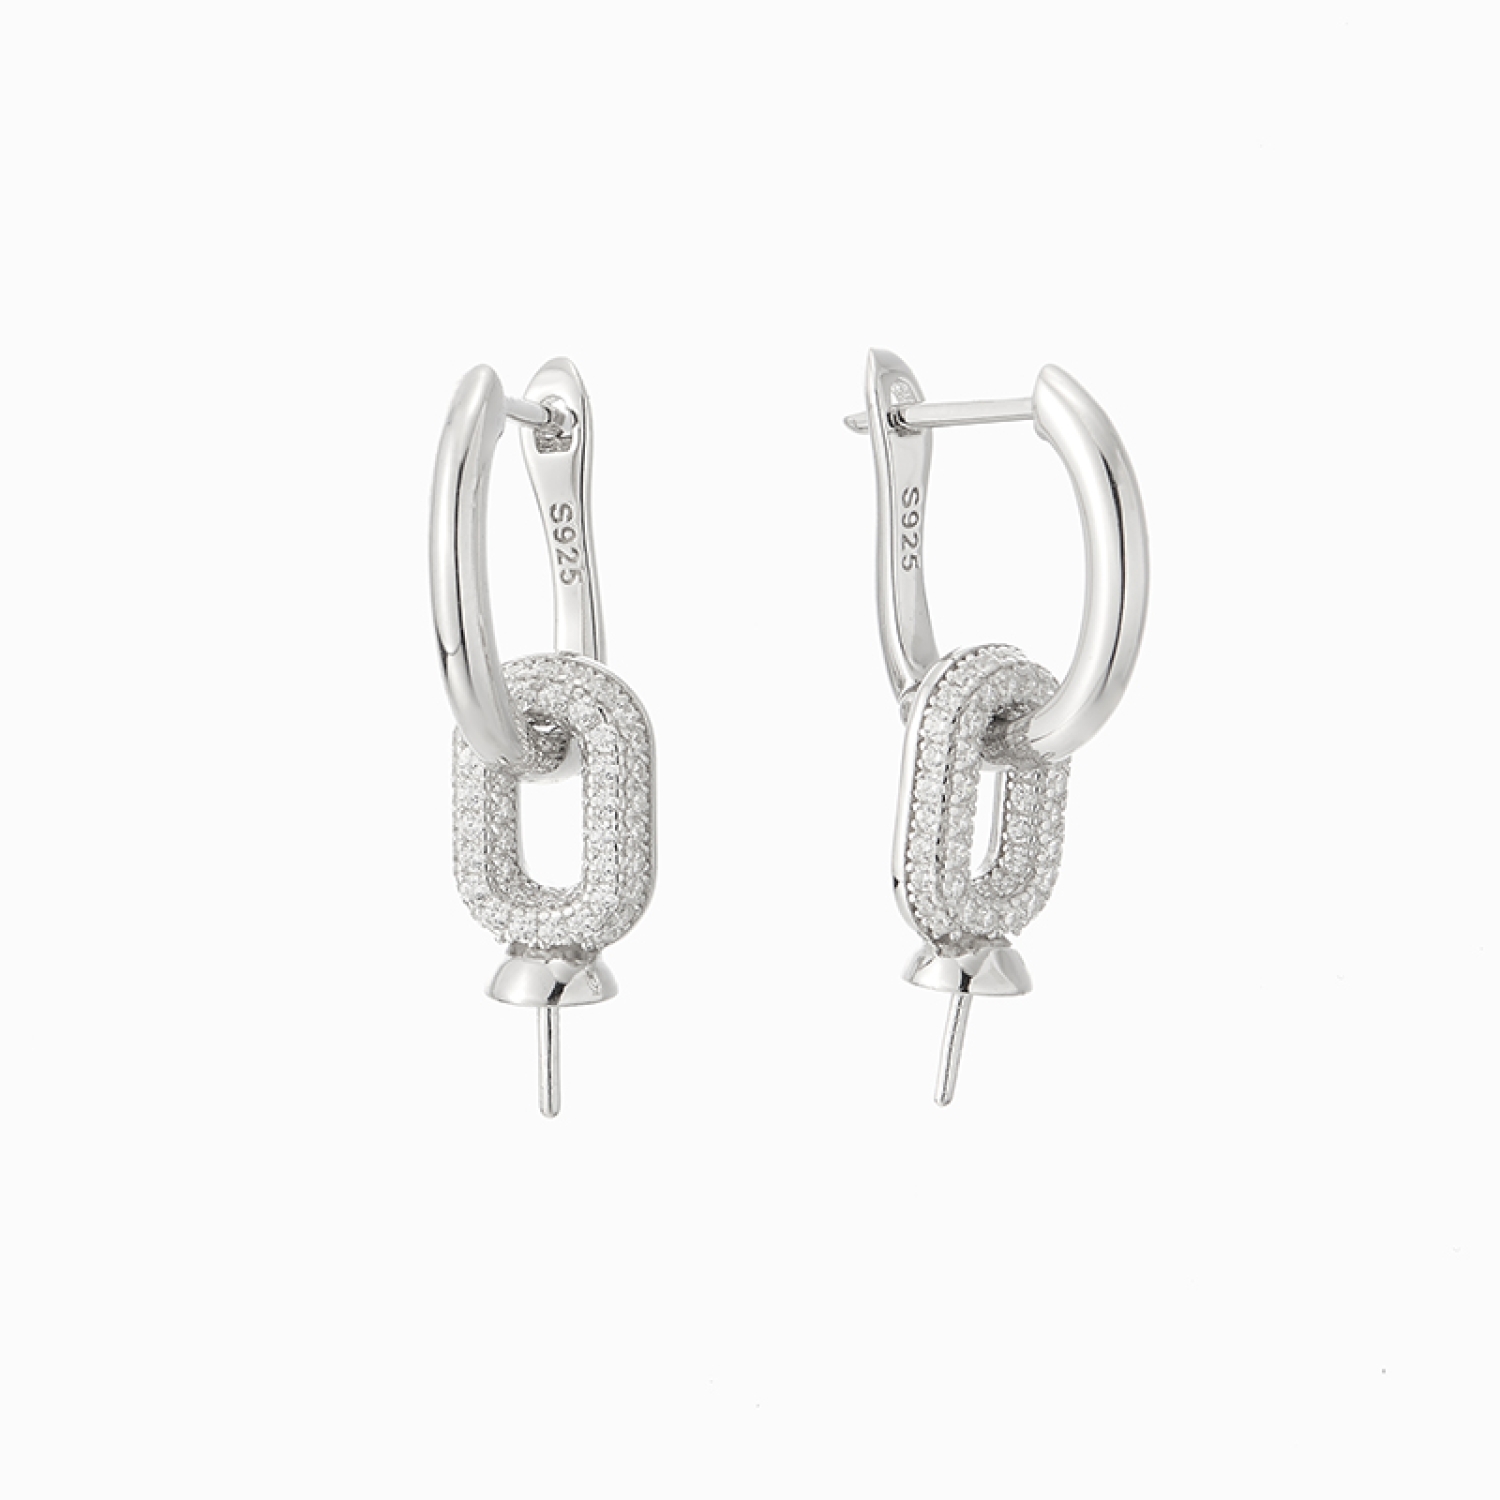 buckle hoop earring base with freshwater pearl 11mm